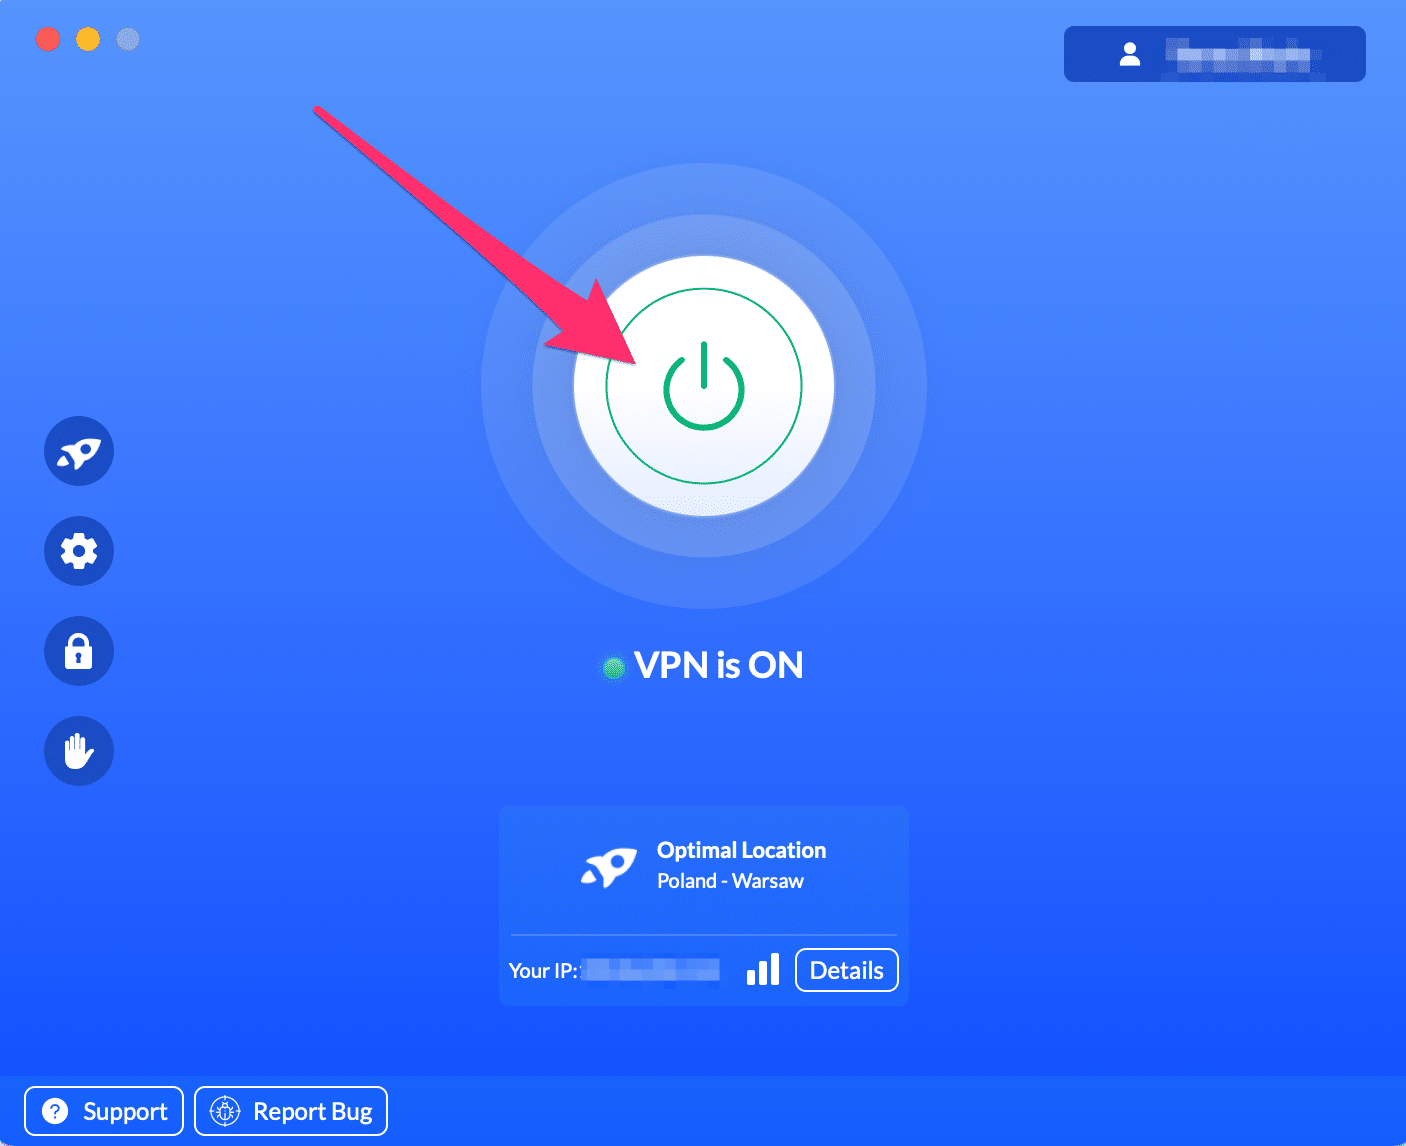 Turn on VPN in your VeePN app